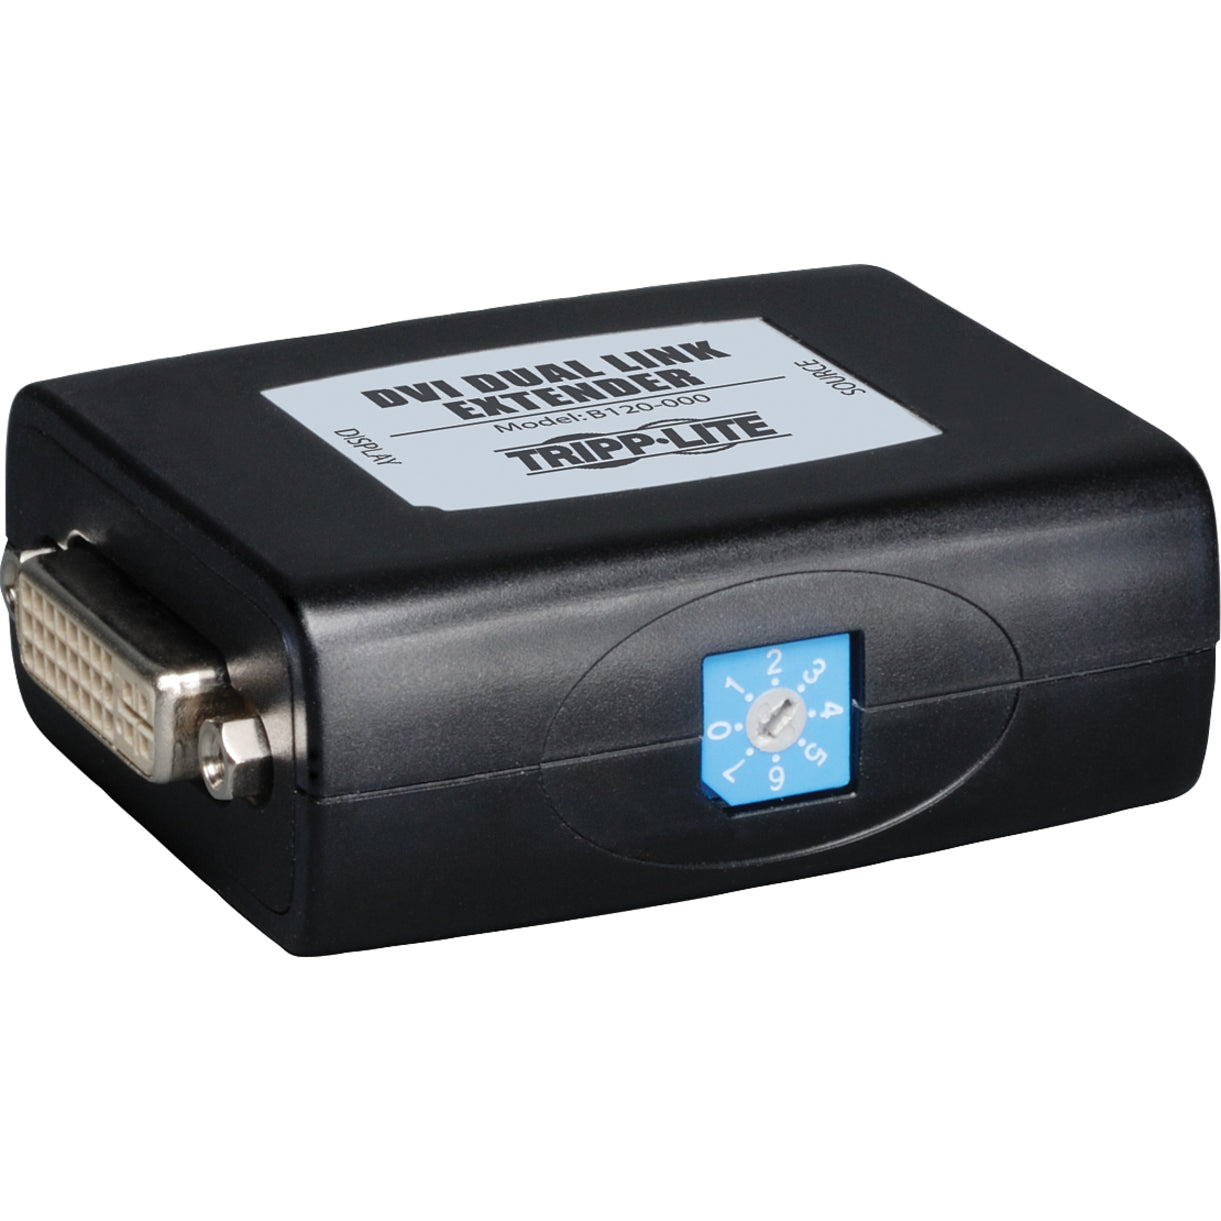 Tripp Lite B120-000 DVI Dual Link Extender Adapter, Extend DVI Signals up to 150ft, WUXGA Resolution Support